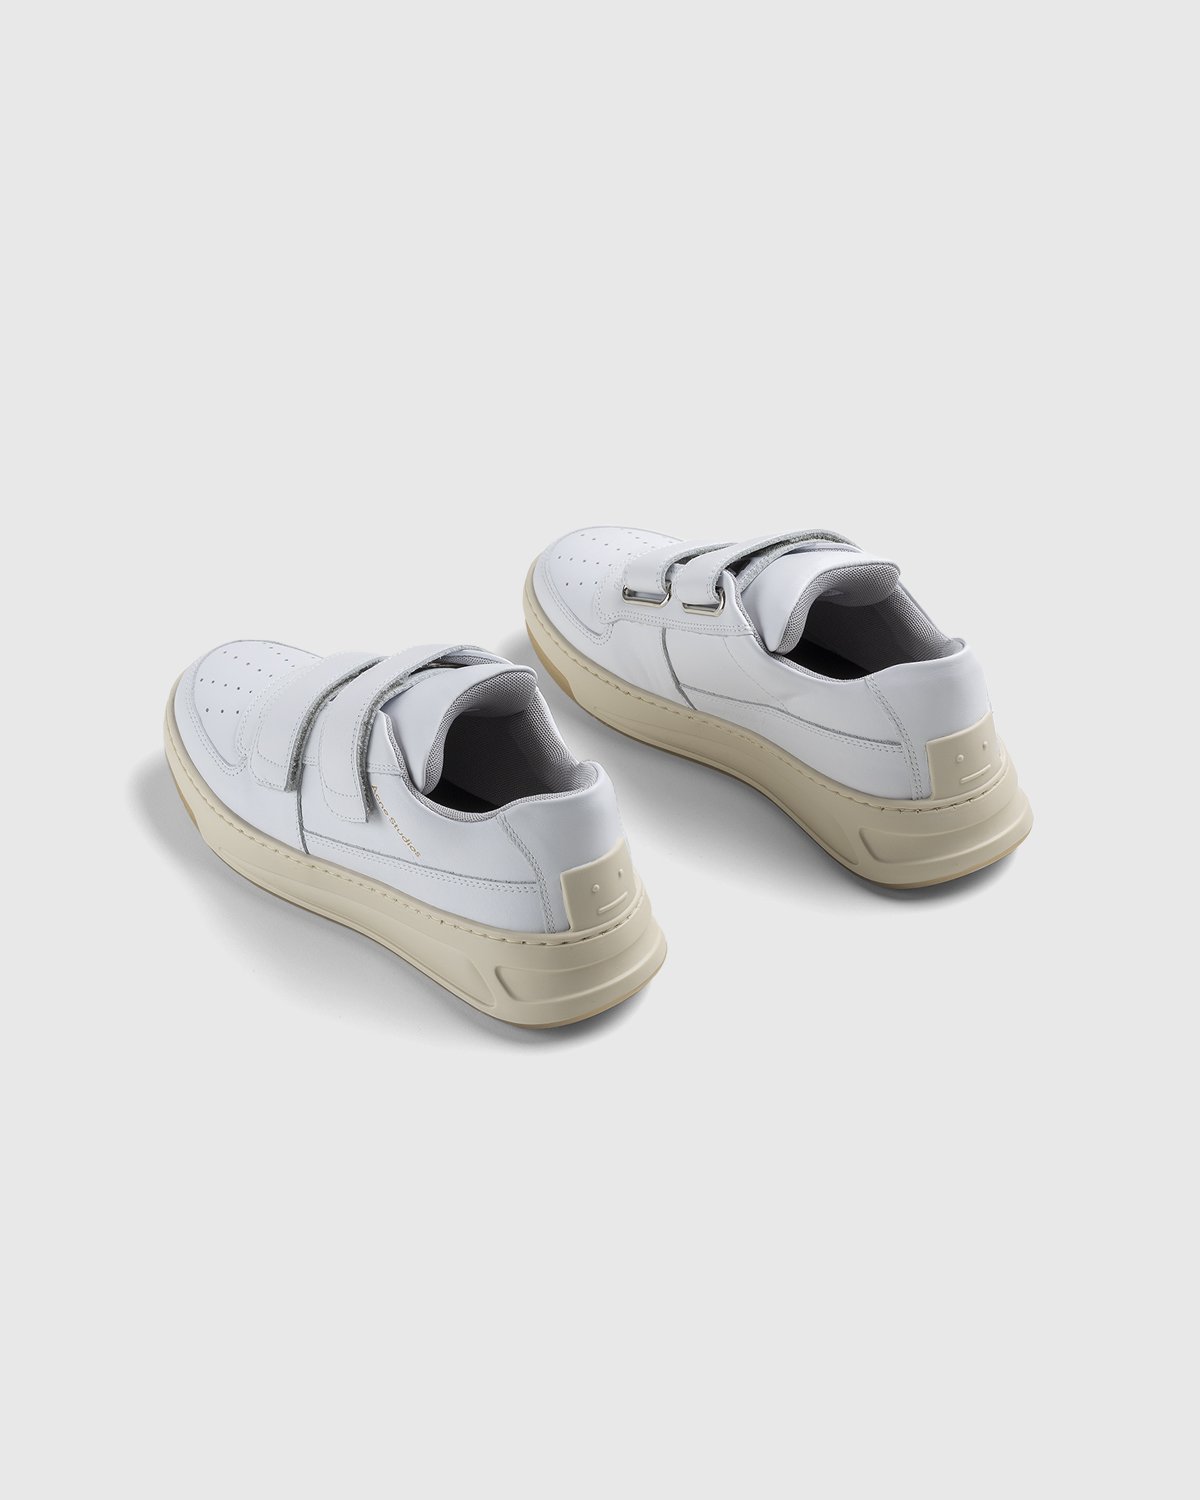 Acne Studios - Perey Velcro Strap Sneakers White - Footwear - White - Image 4